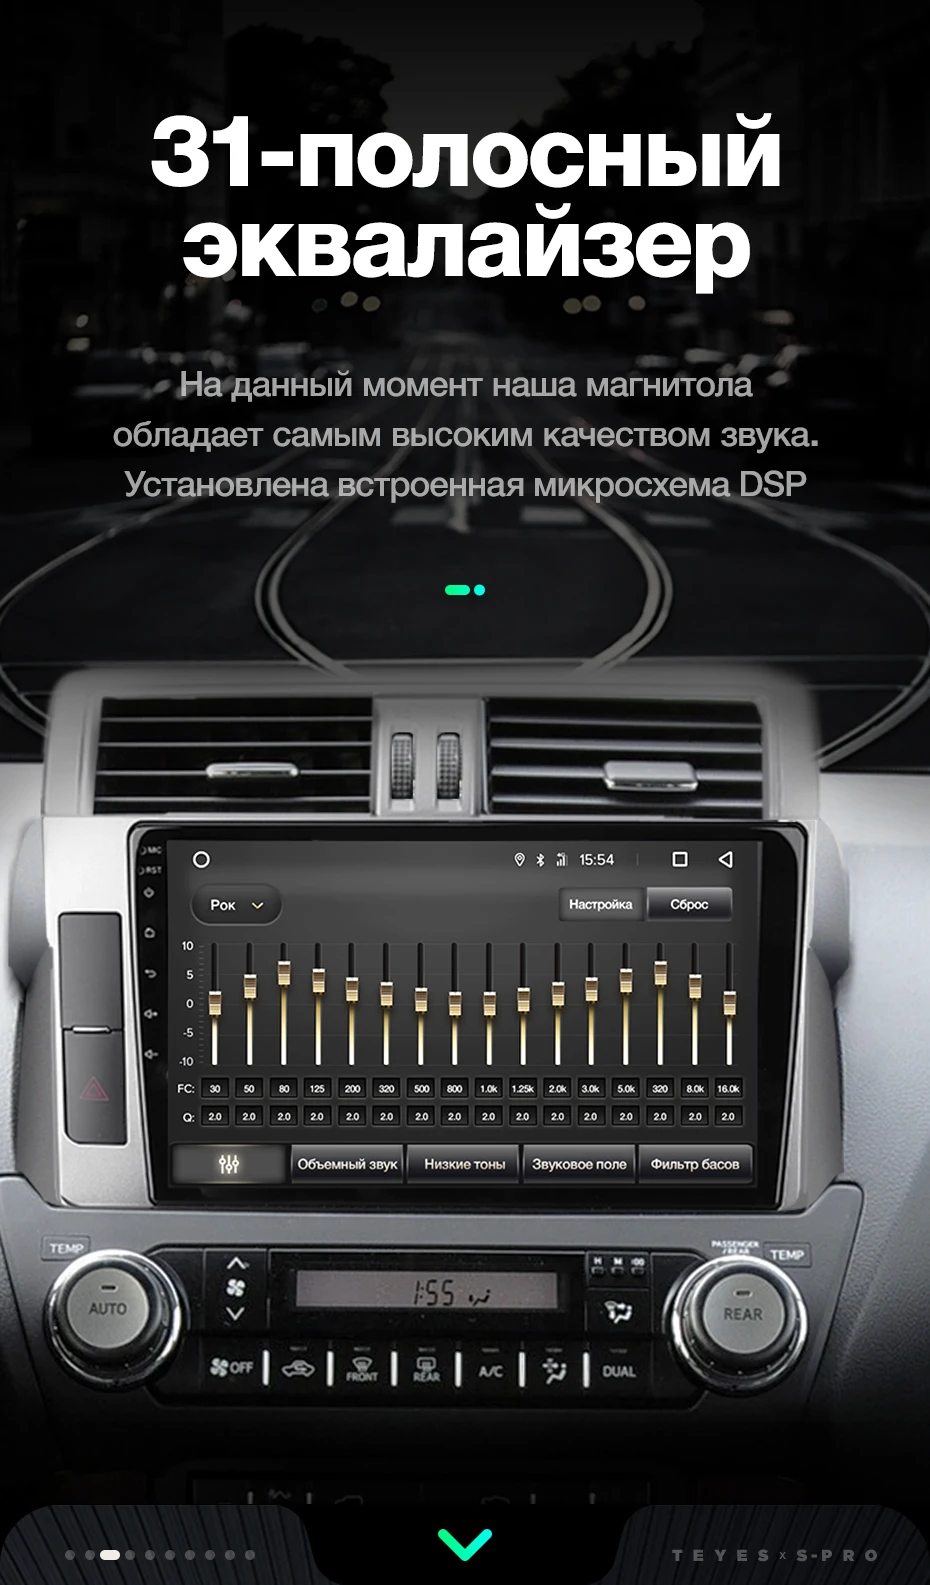 TEYES SPRO Штатное Головное устройство For Toyota Land Cruiser Prado 2013- GPS Android 8.1 магнитола автомагнитолы Андроид для Тойота Ленд Крузер Прадо 4 J150 аксессуары штатная магнитола автомобильная мультимедиа